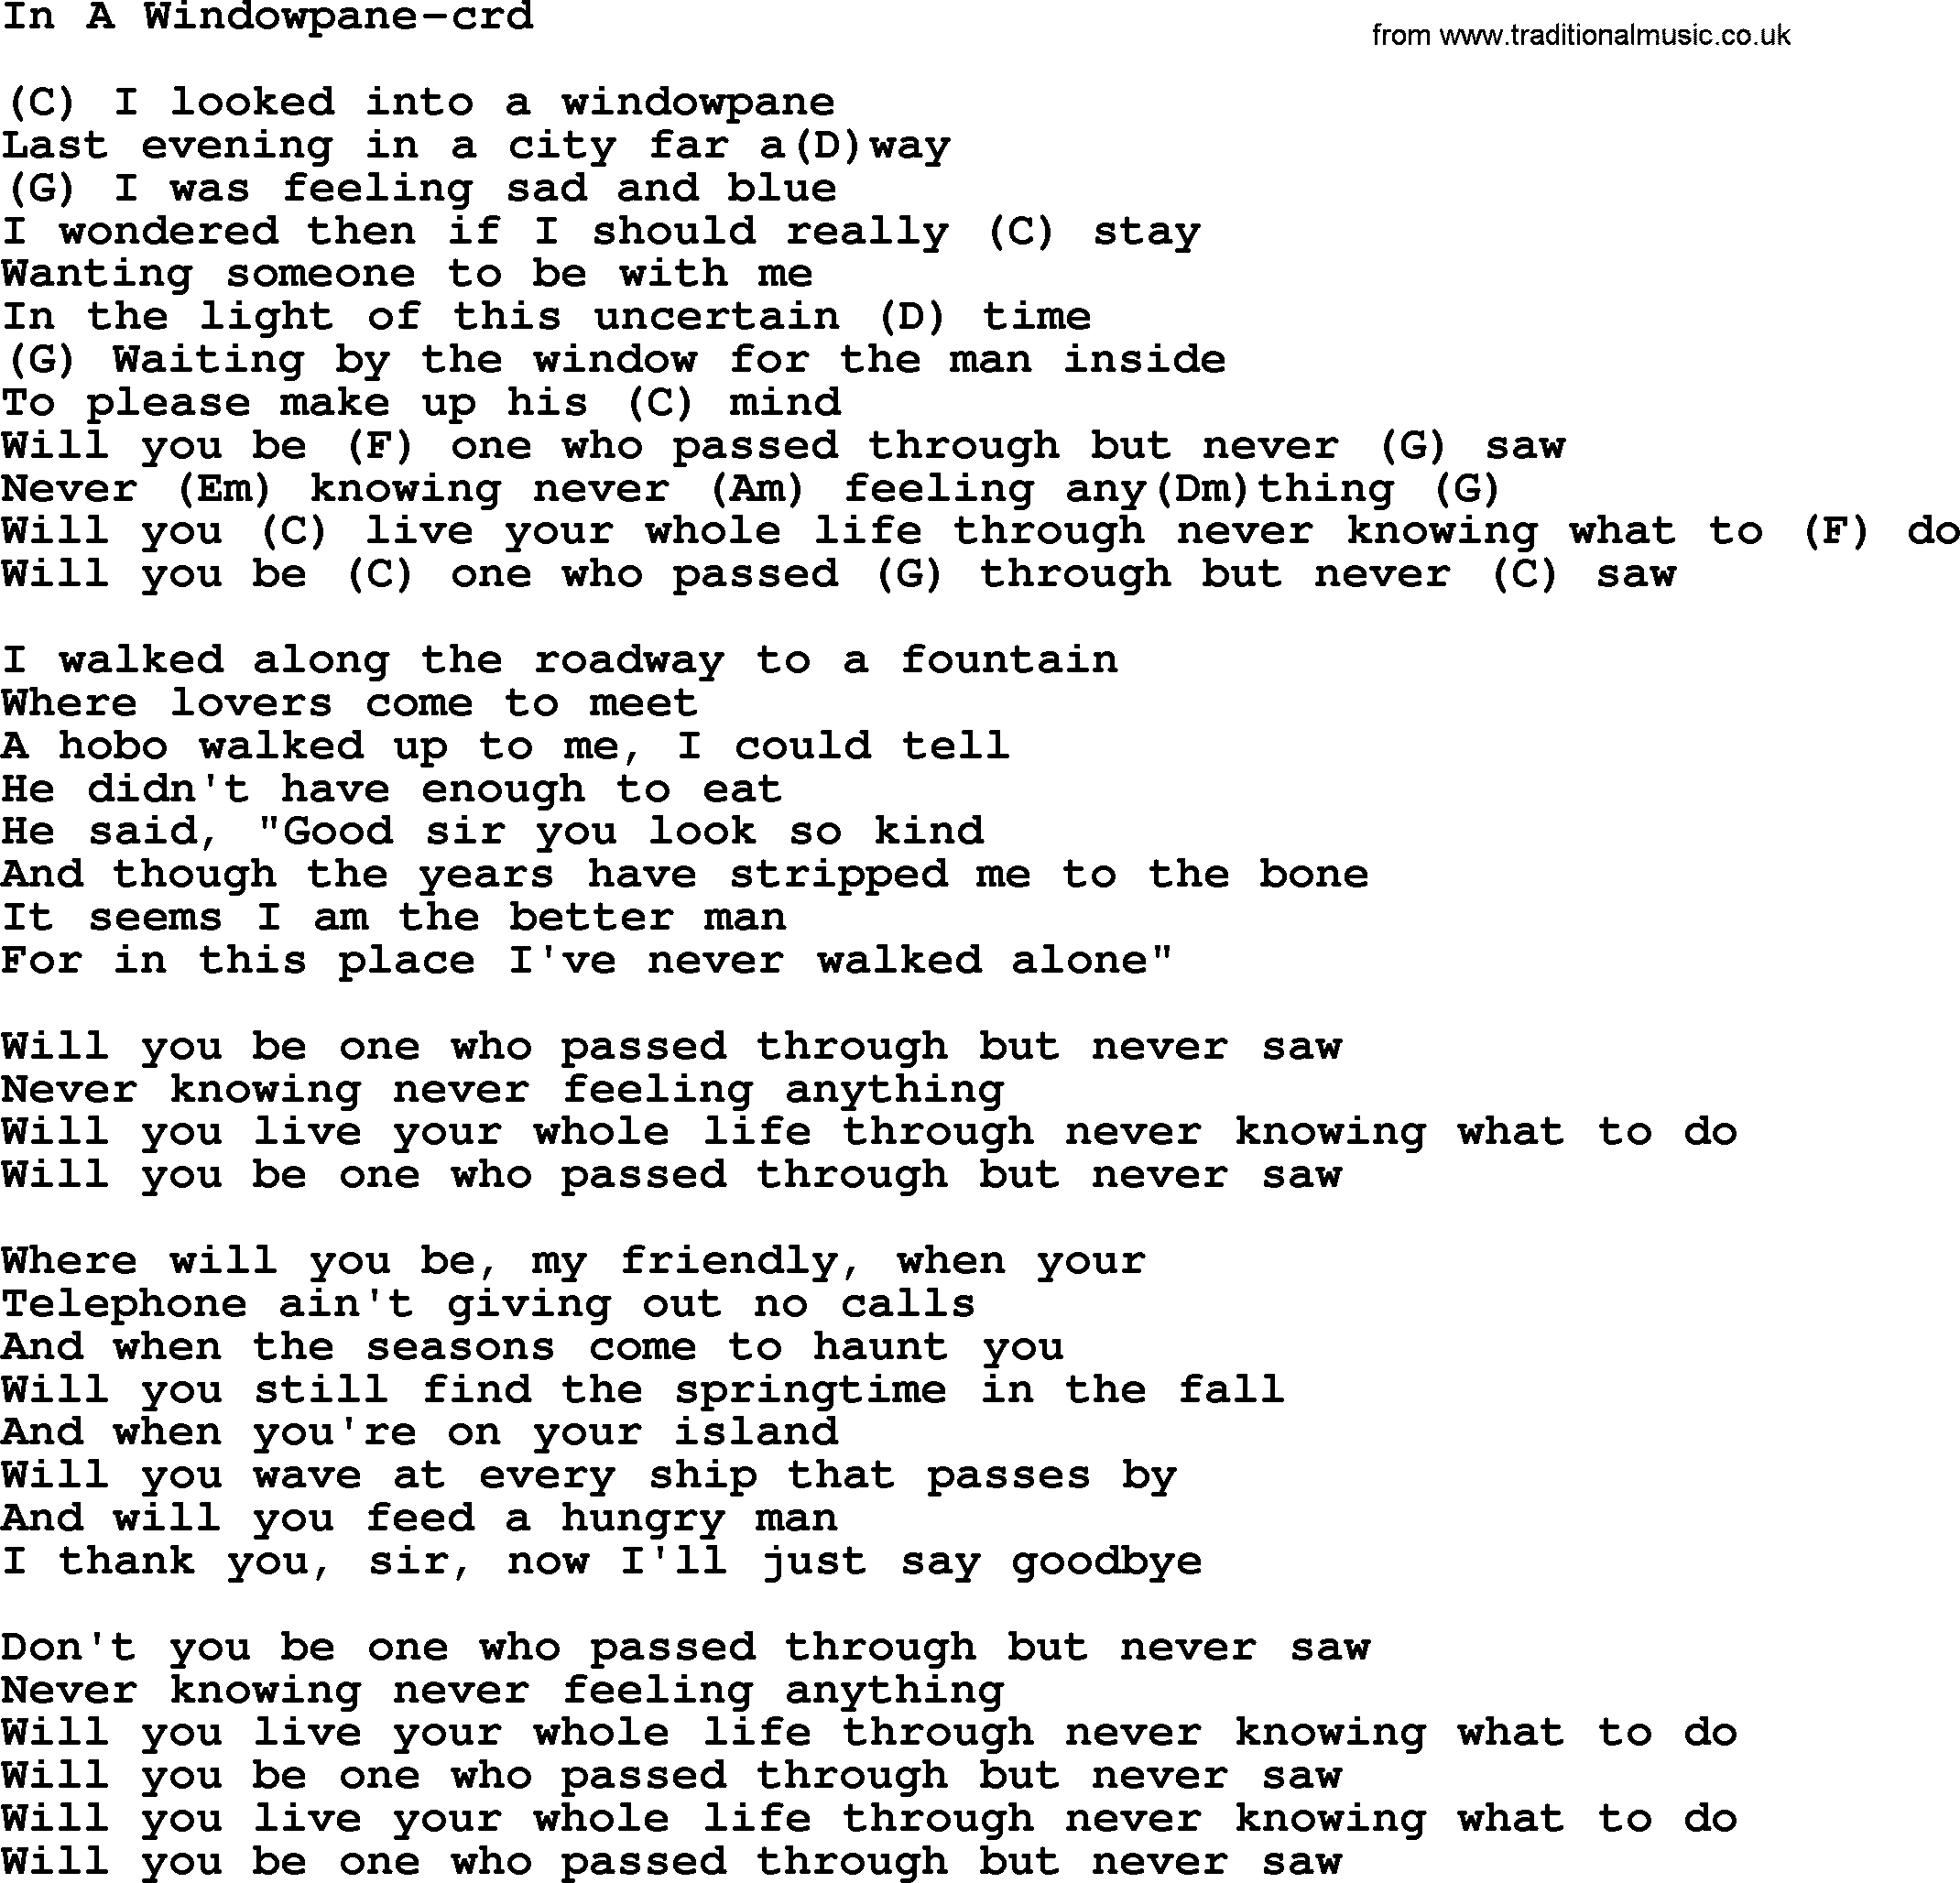 Gordon Lightfoot song In A Windowpane, lyrics and chords